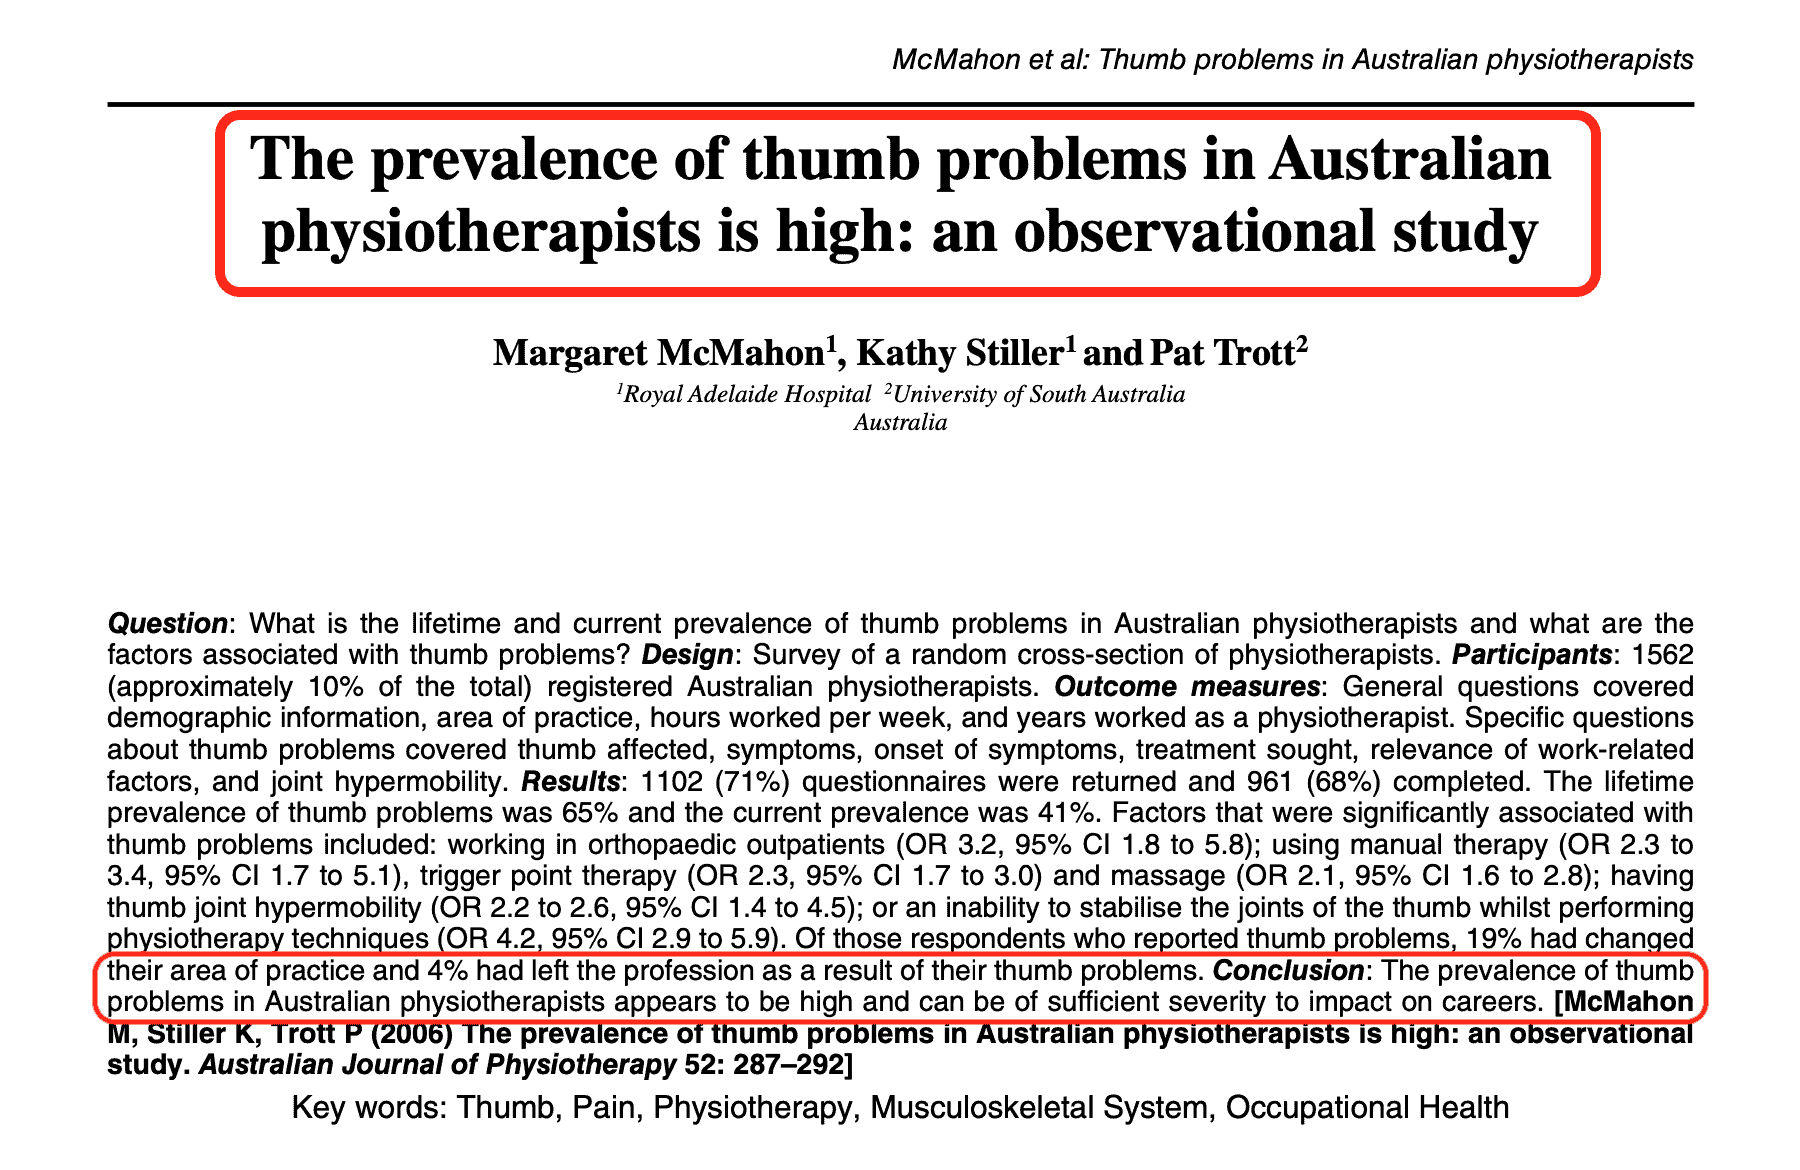 Studio Problemi mano Fisioterapisti Australian Journal of Physiotherapy 2006 Vol. 52